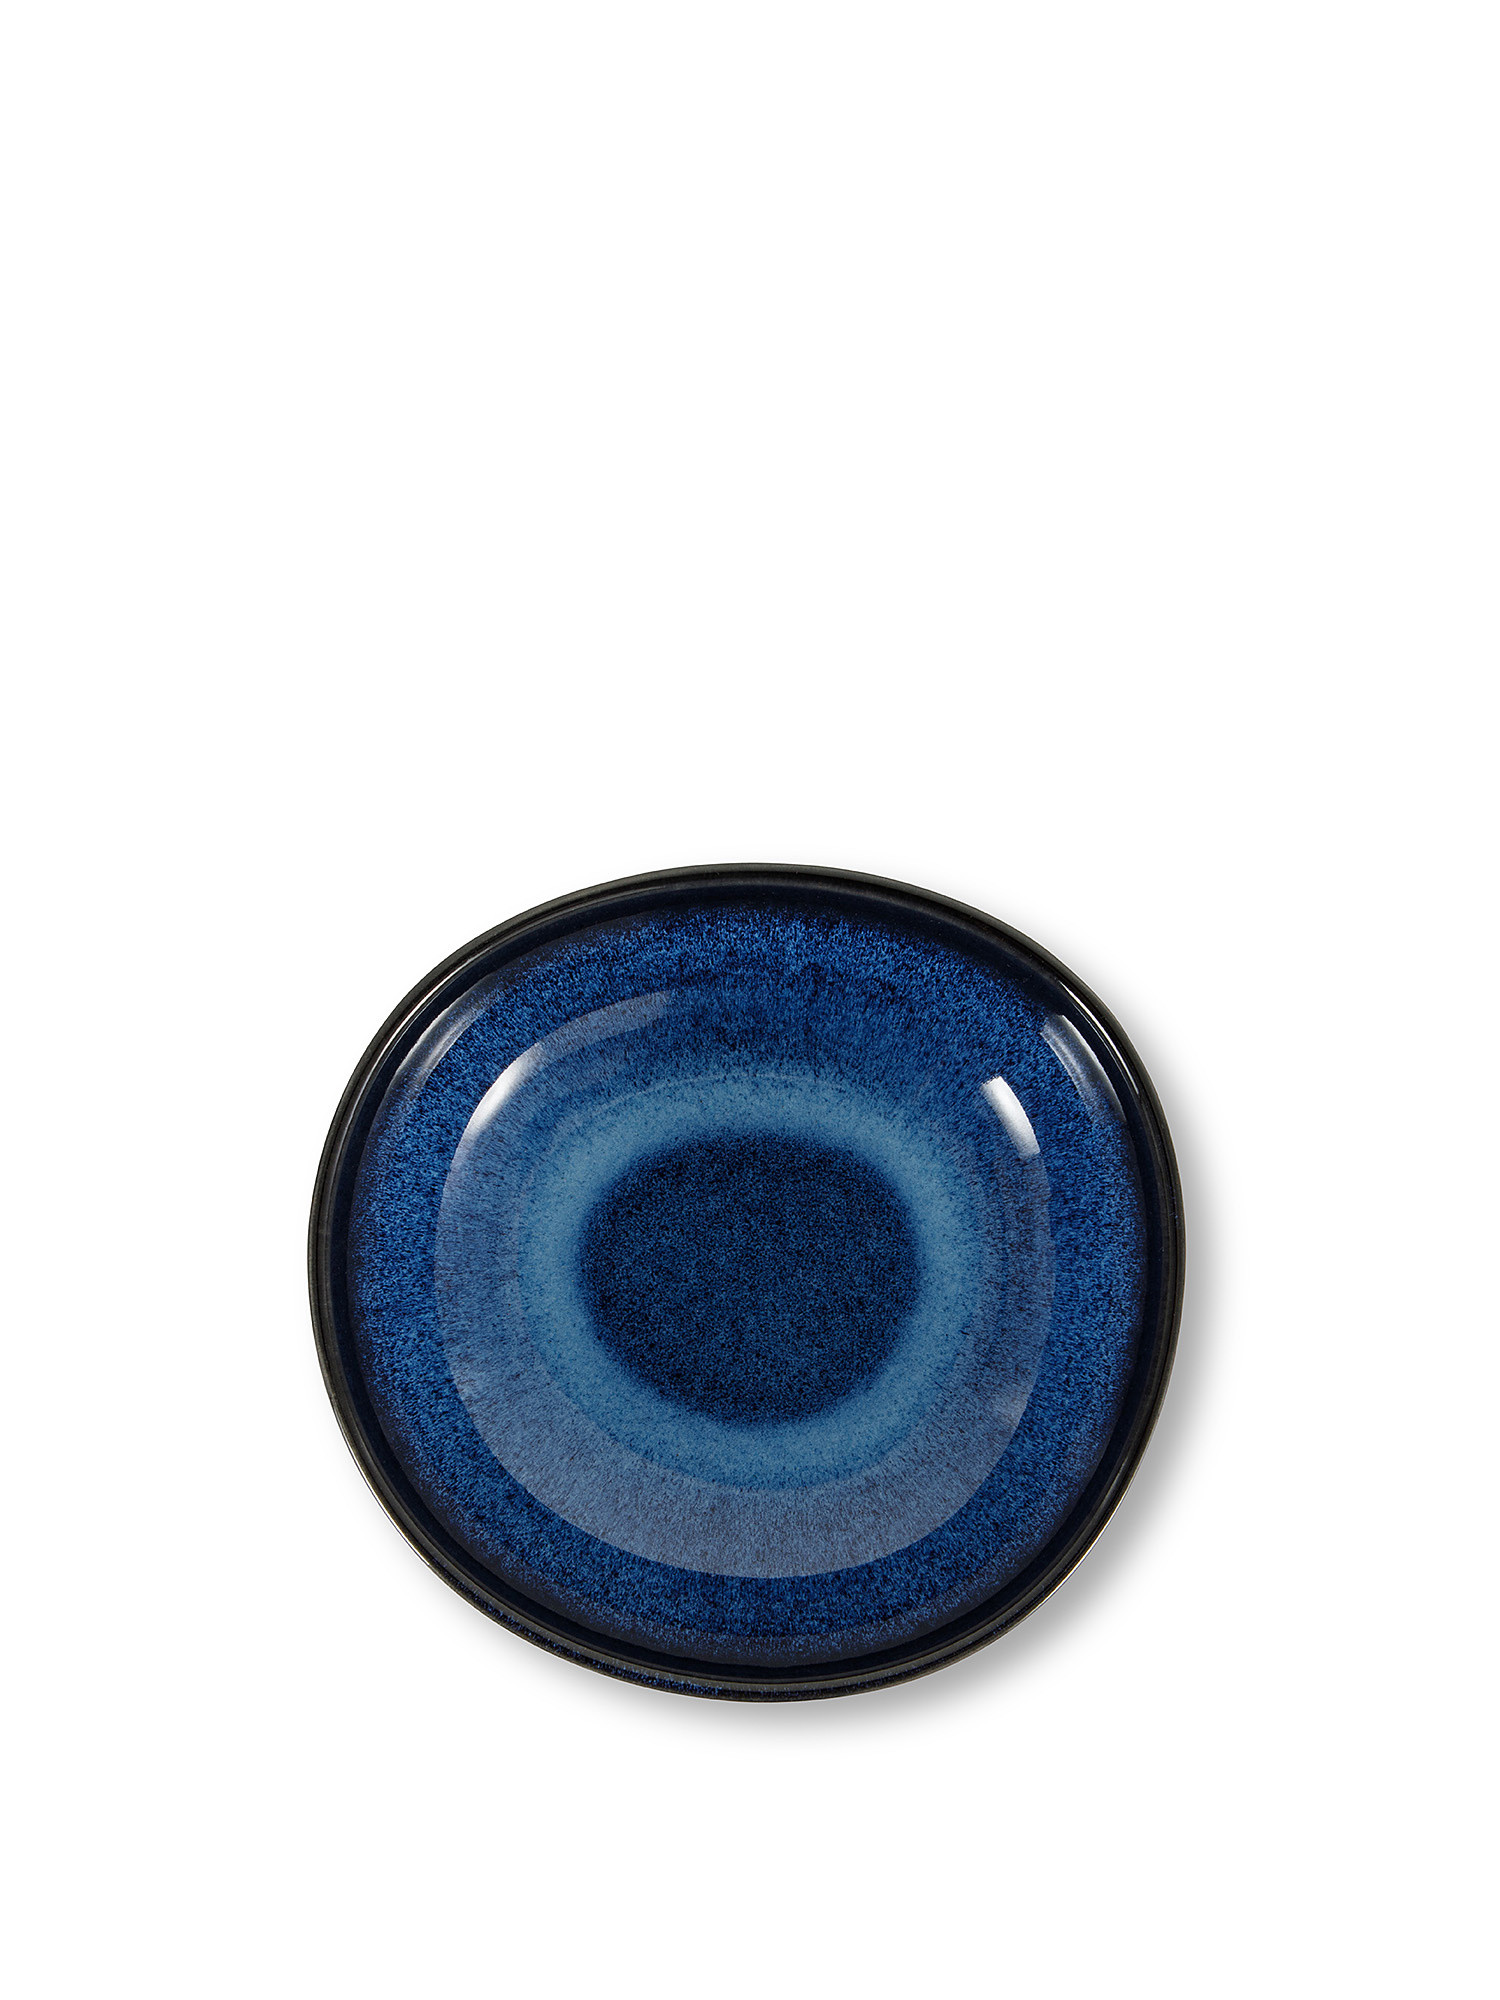 Coppetta ceramica Karma, Blu, large image number 1